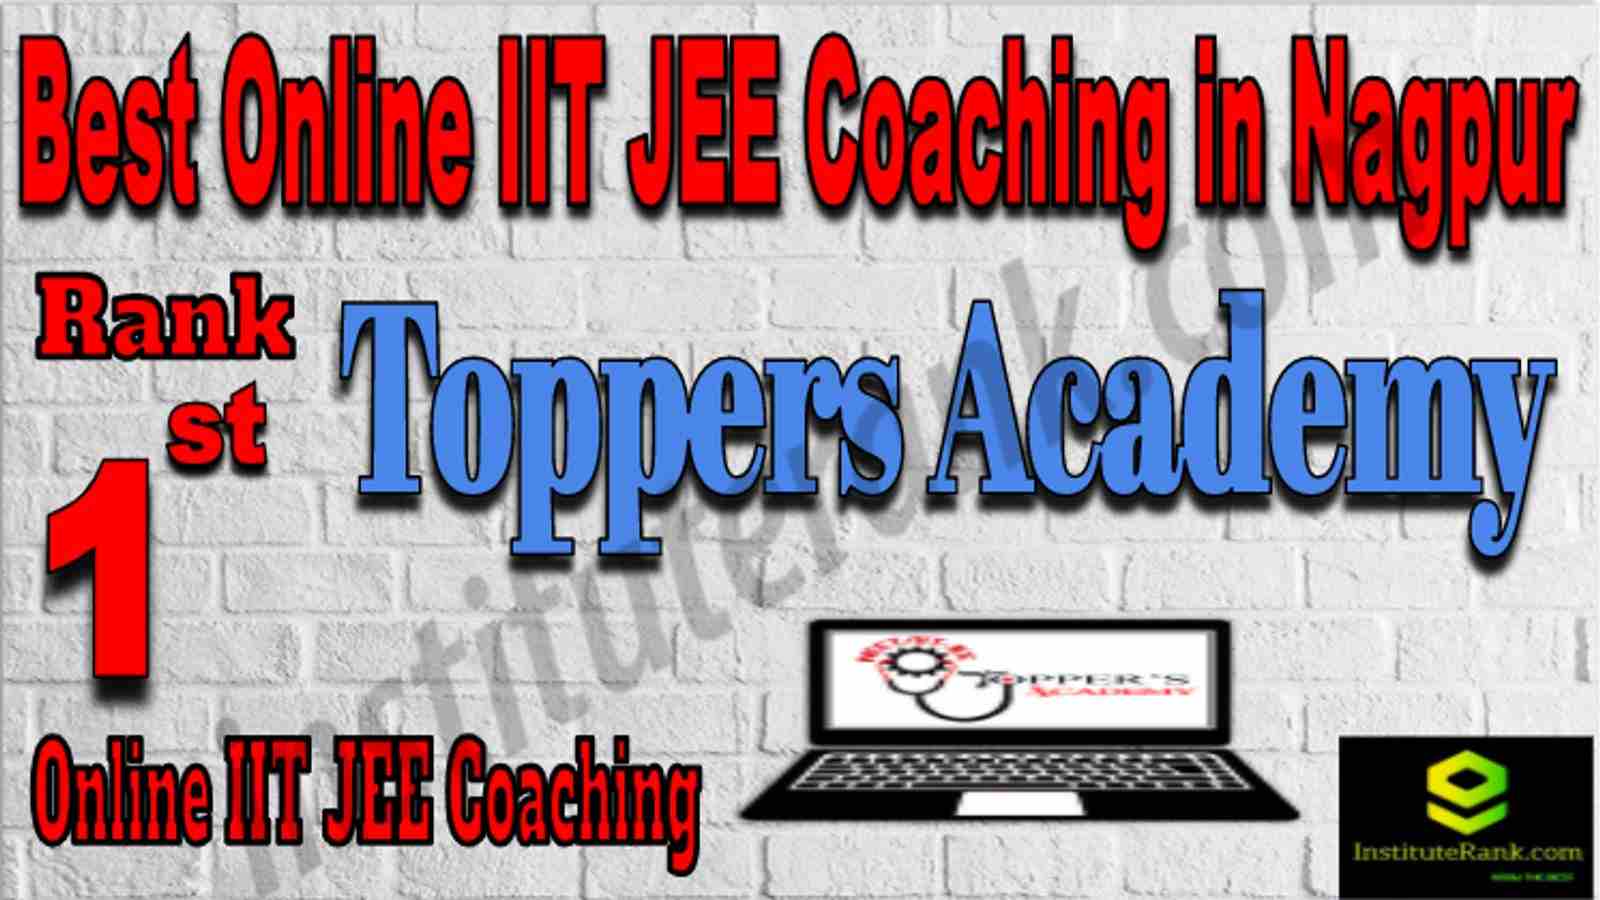 Rank 1 Best Online IIT JEE Coaching in Nagpur